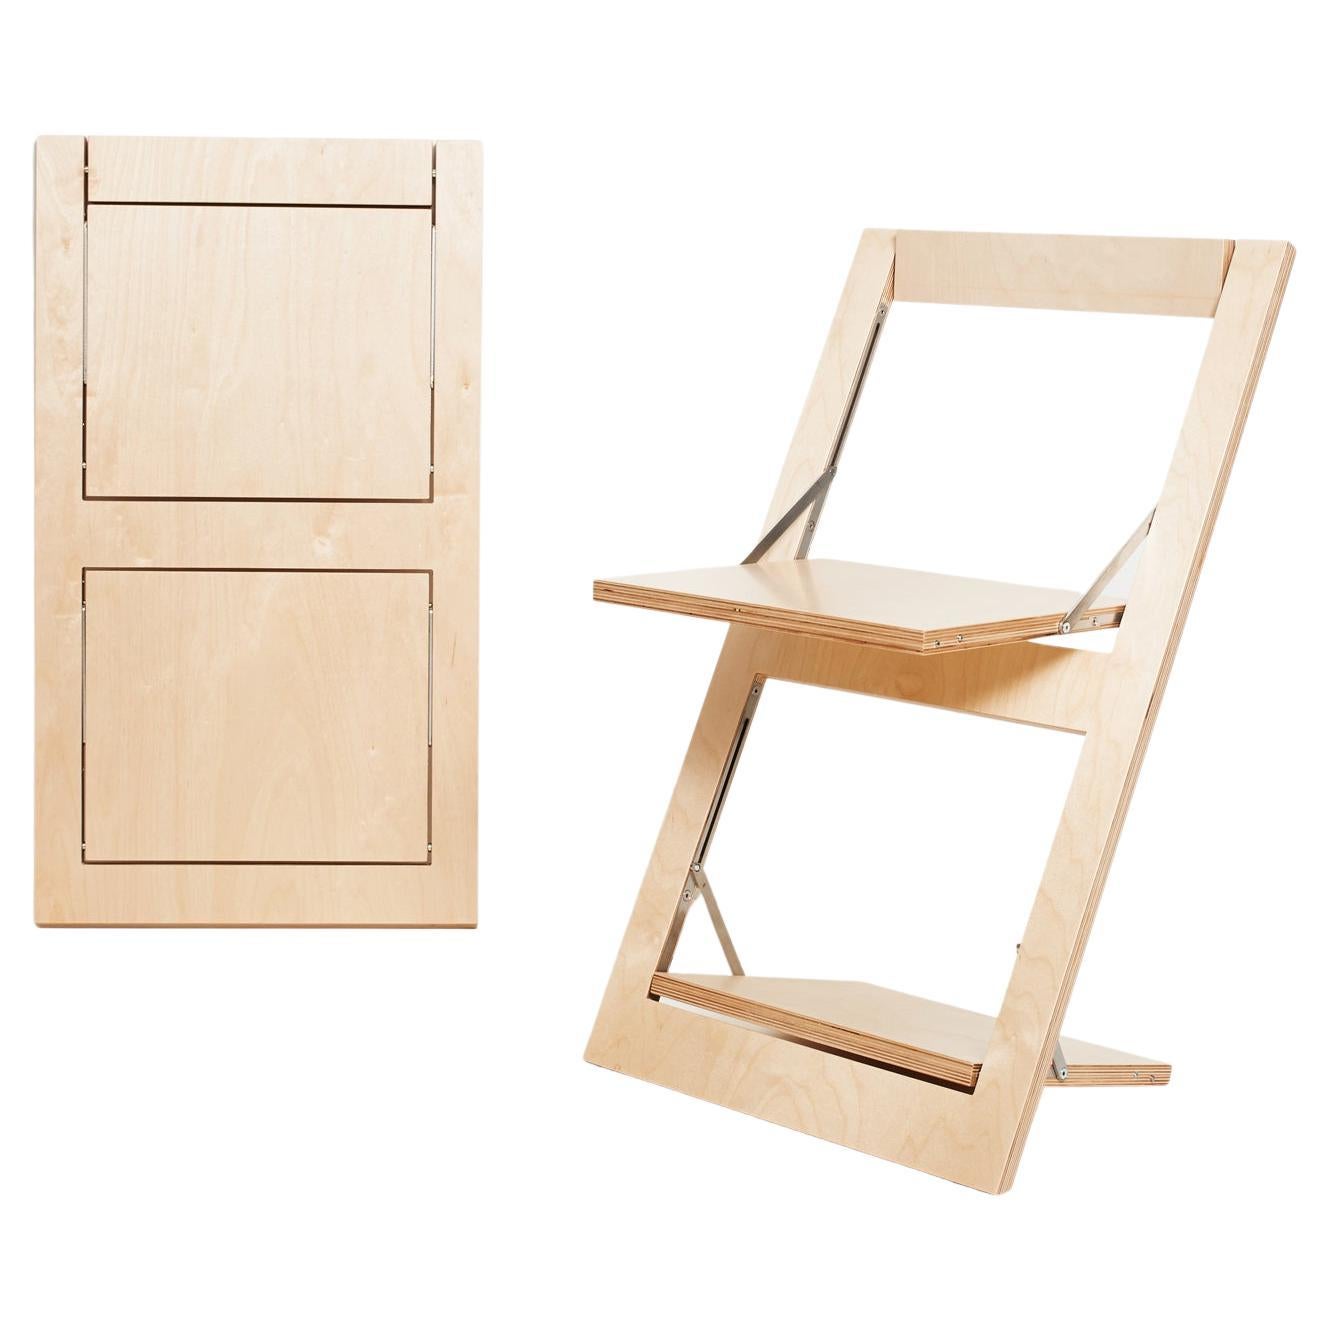 Fläpps Folding Chair, Birch Clear Lacquered